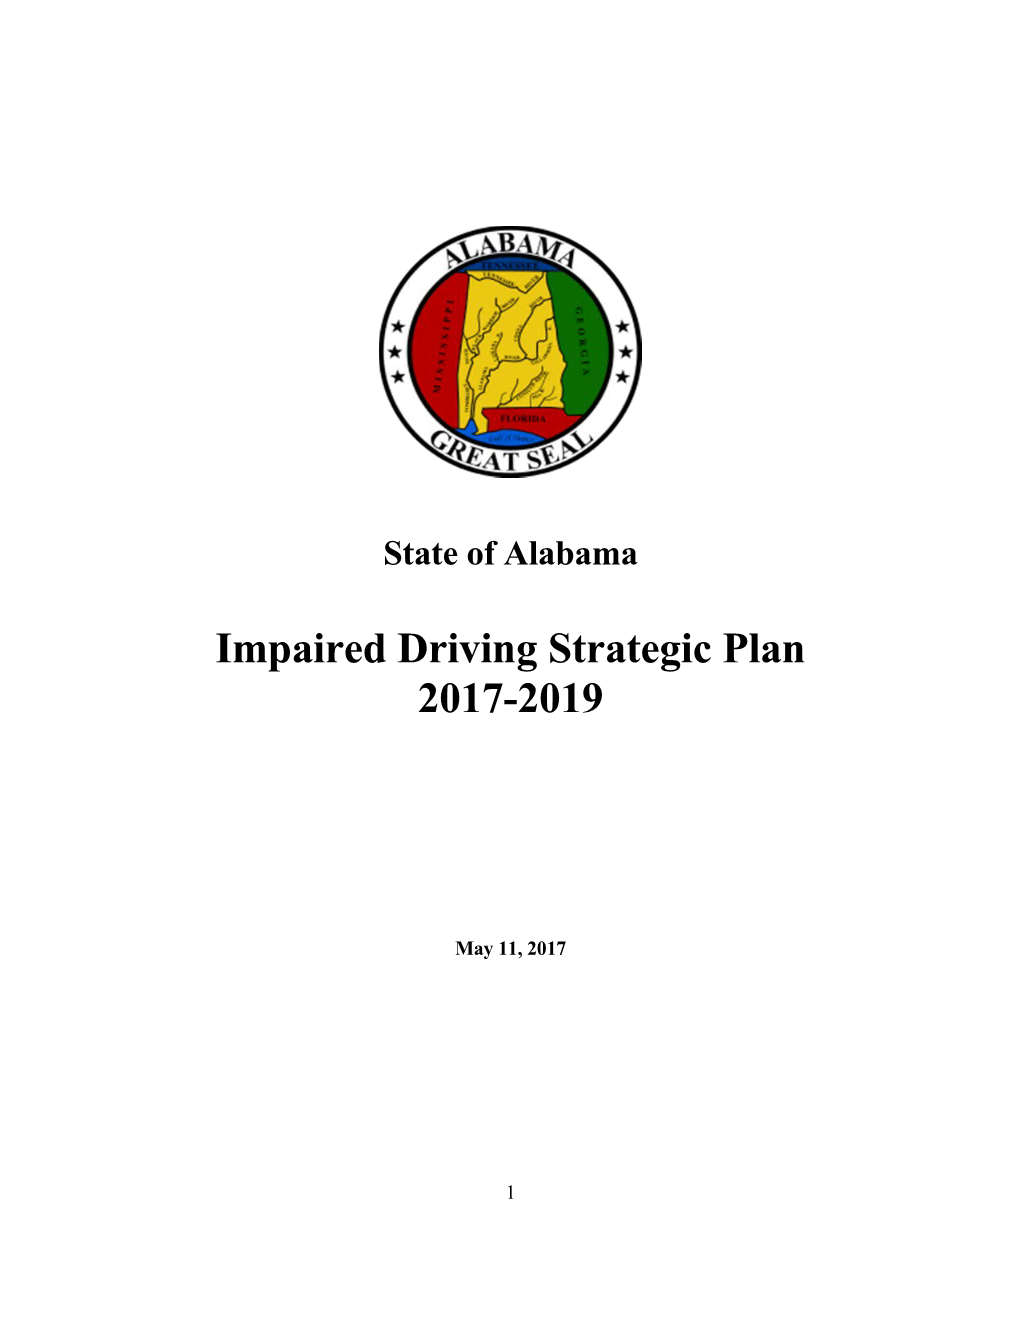 Impaired Driving Strategic Plan